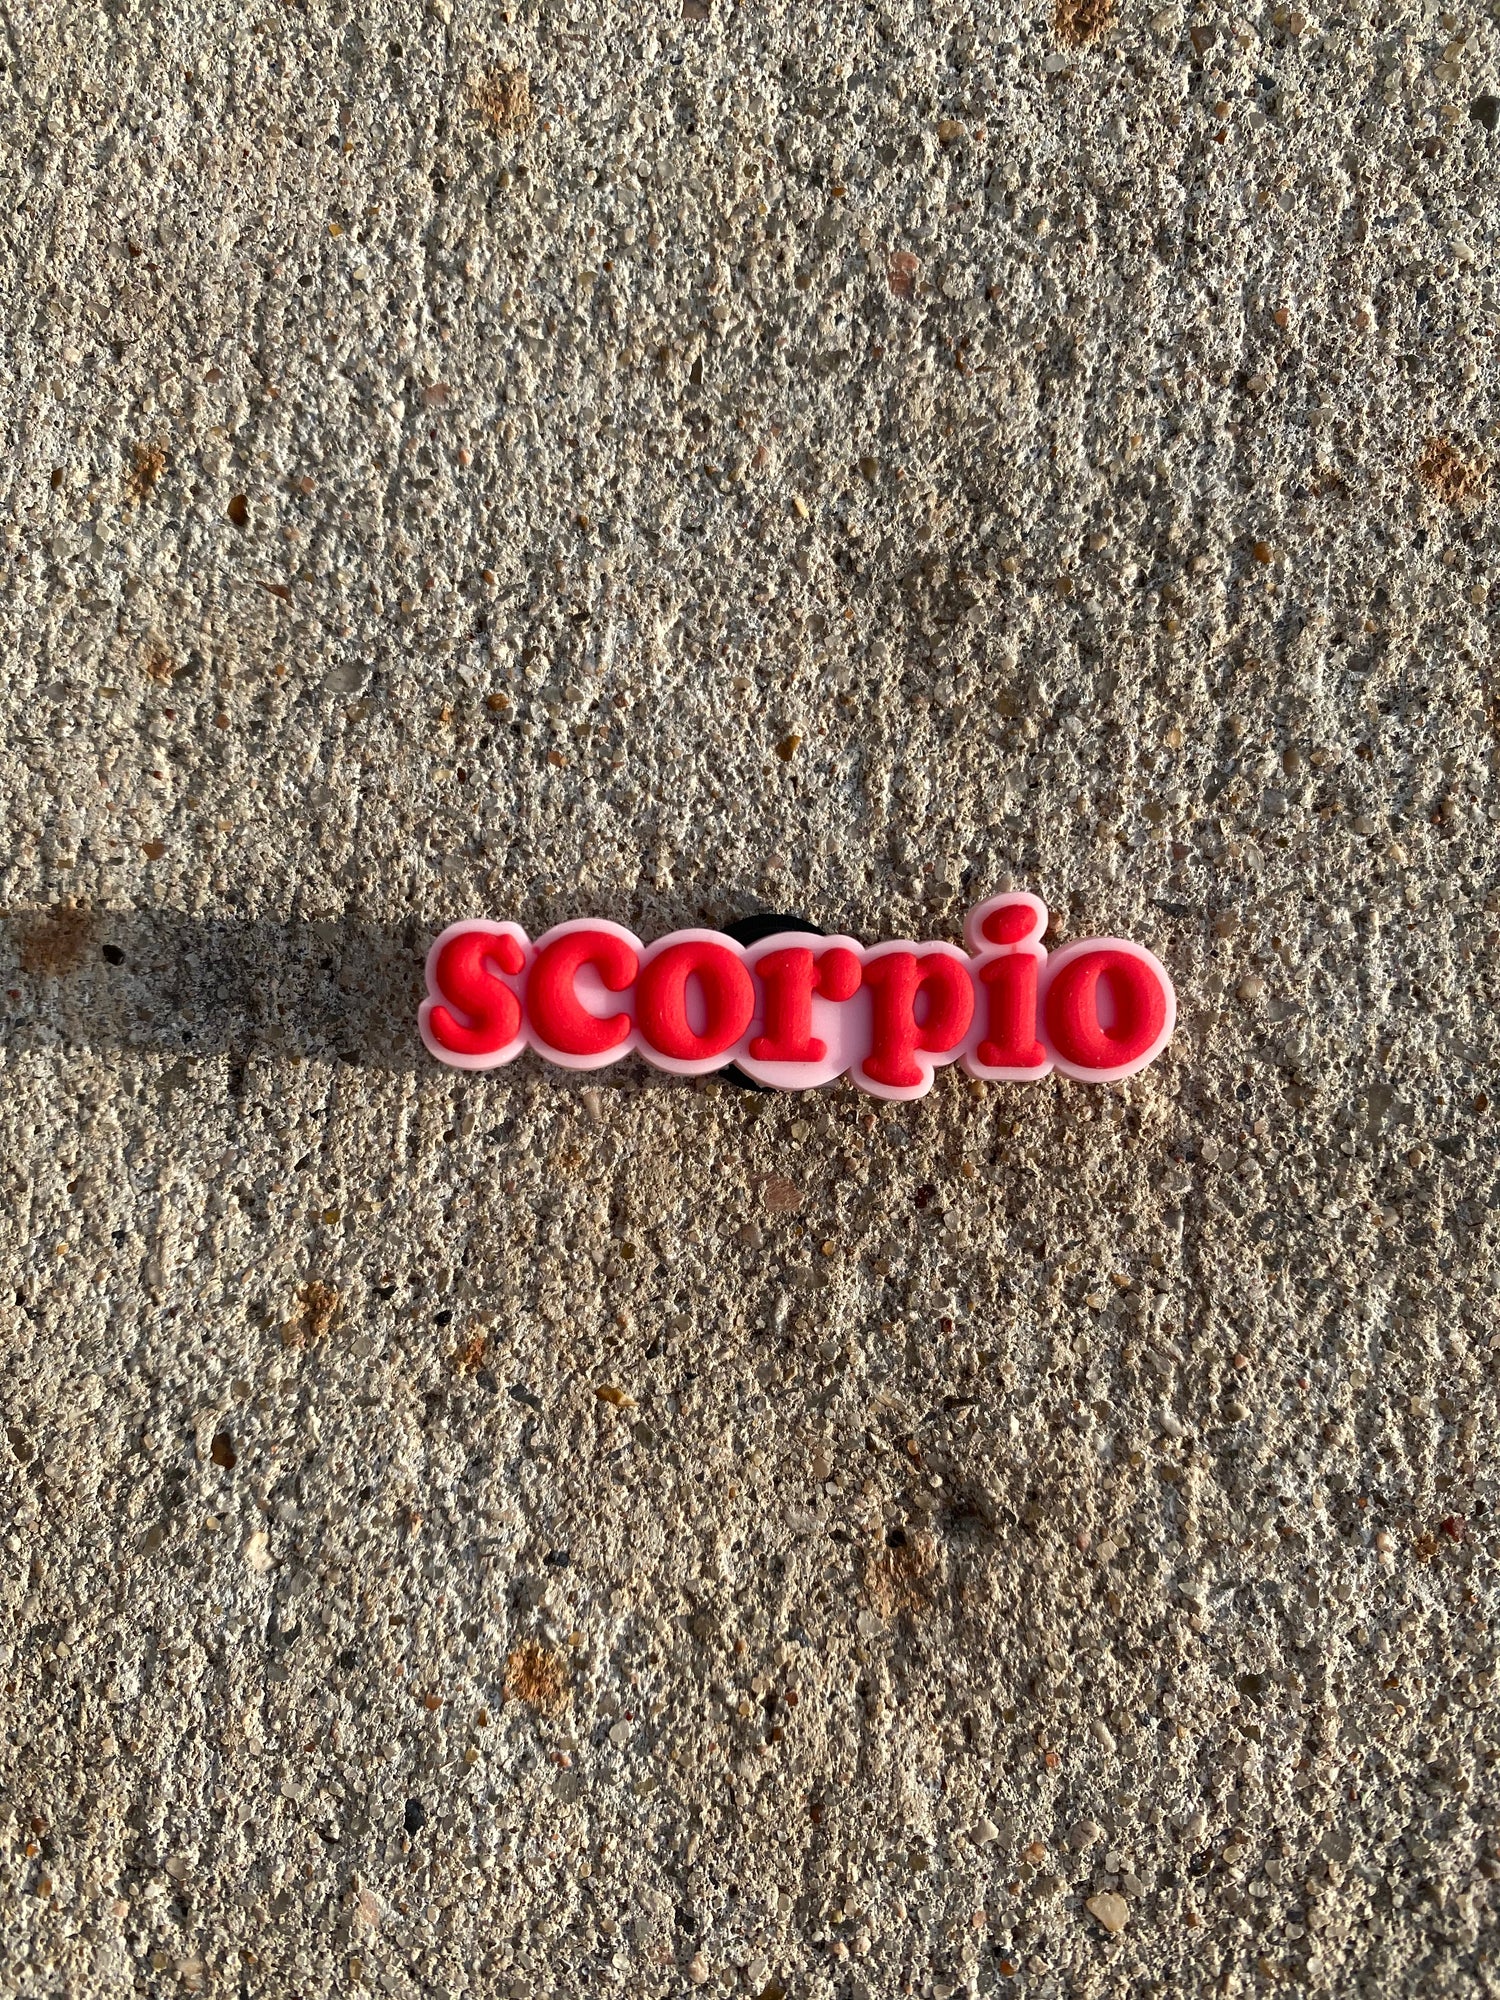 Scorpio Zodiac Sign Croc  Charms Jibbitz Gift 